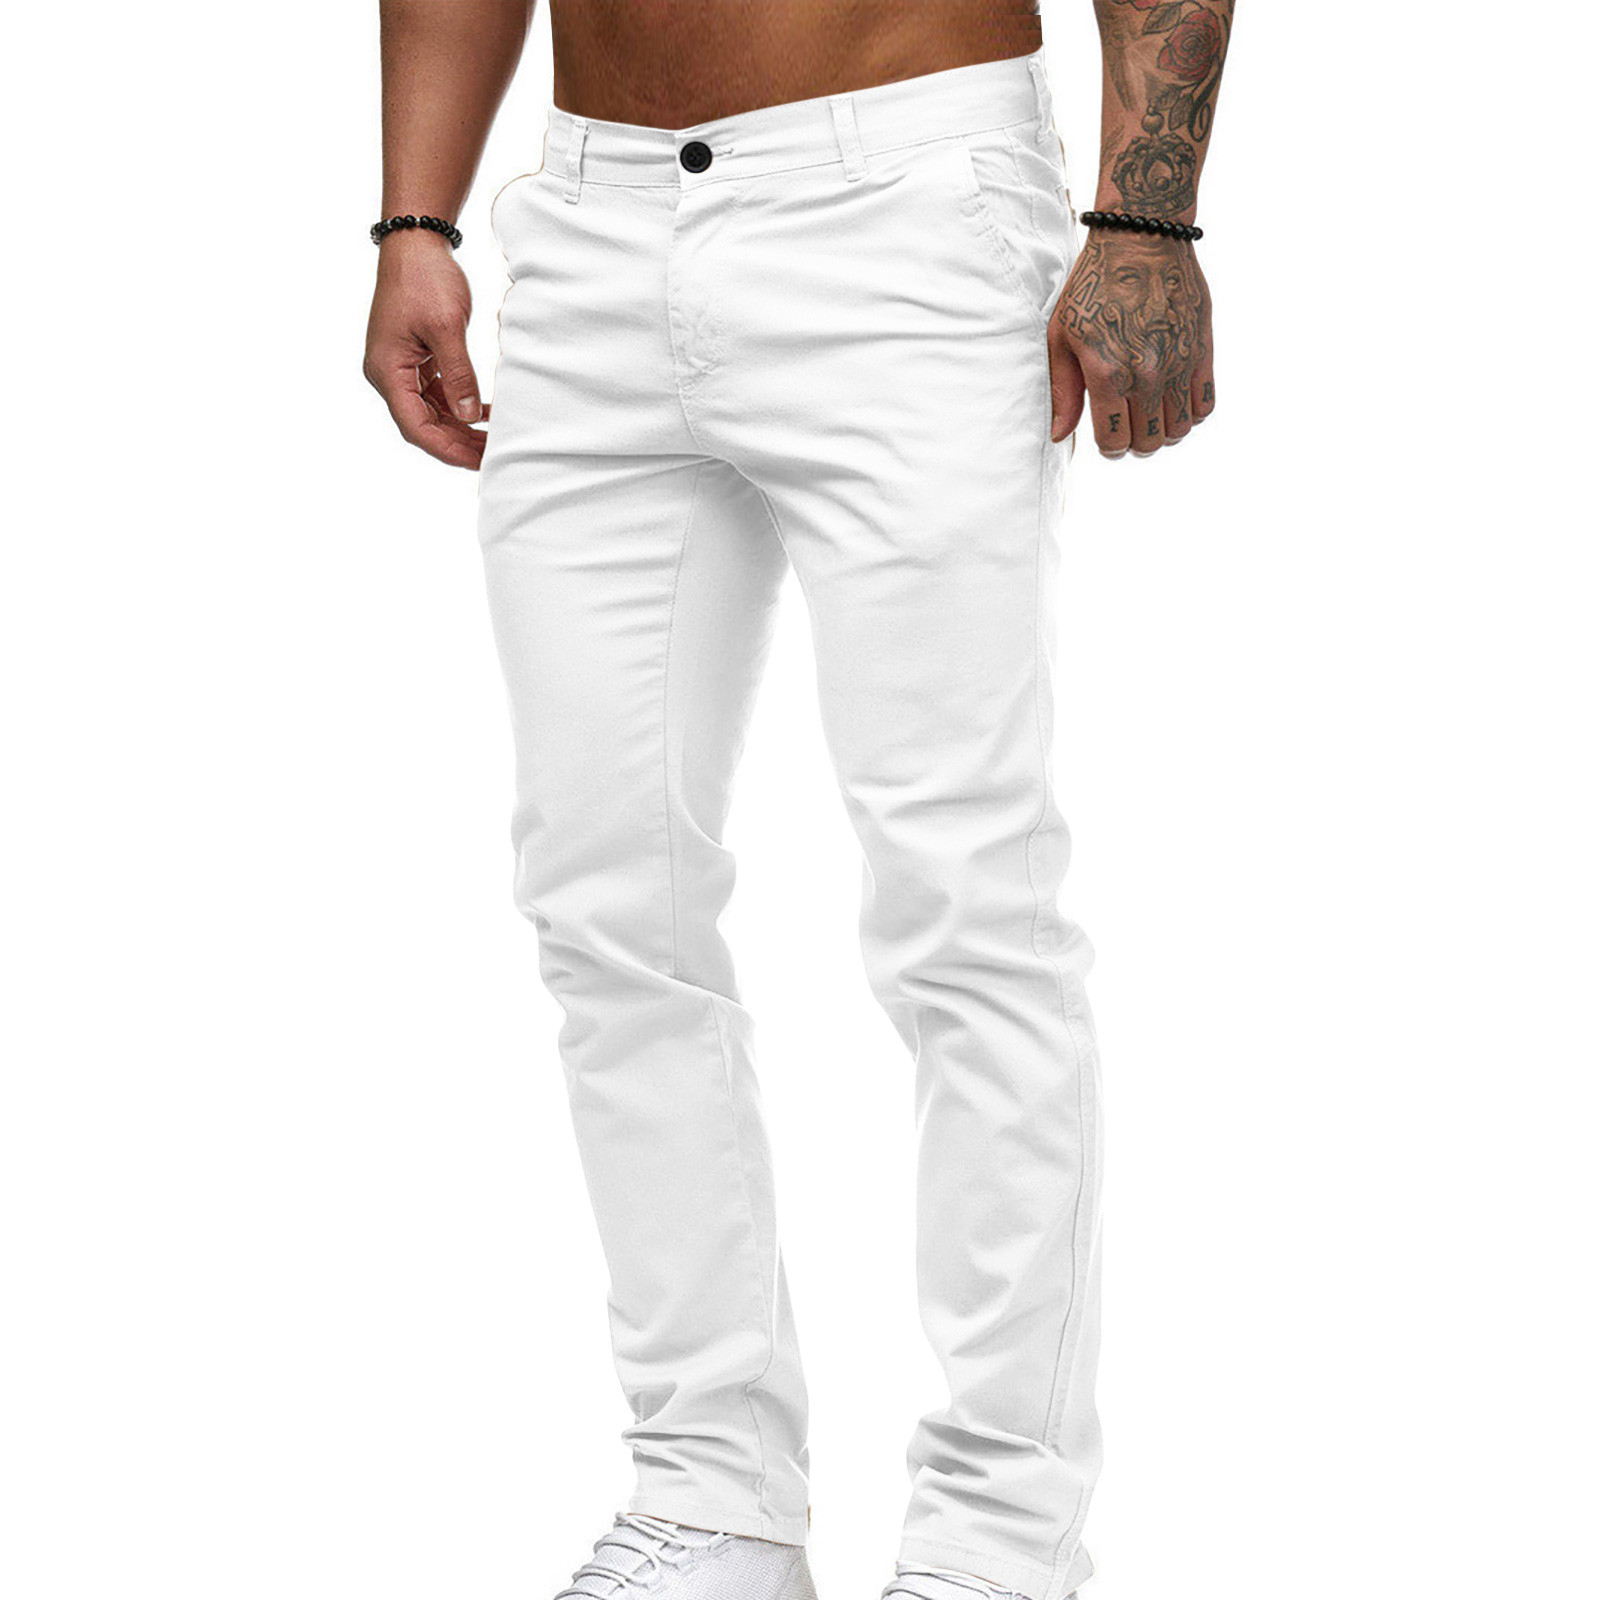 DeHolifer Mens Casual Chinos Pants Cotton Slacks Elastic Waistband Classic Fit Flat Front Khaki Pant White 4XL - image 2 of 5